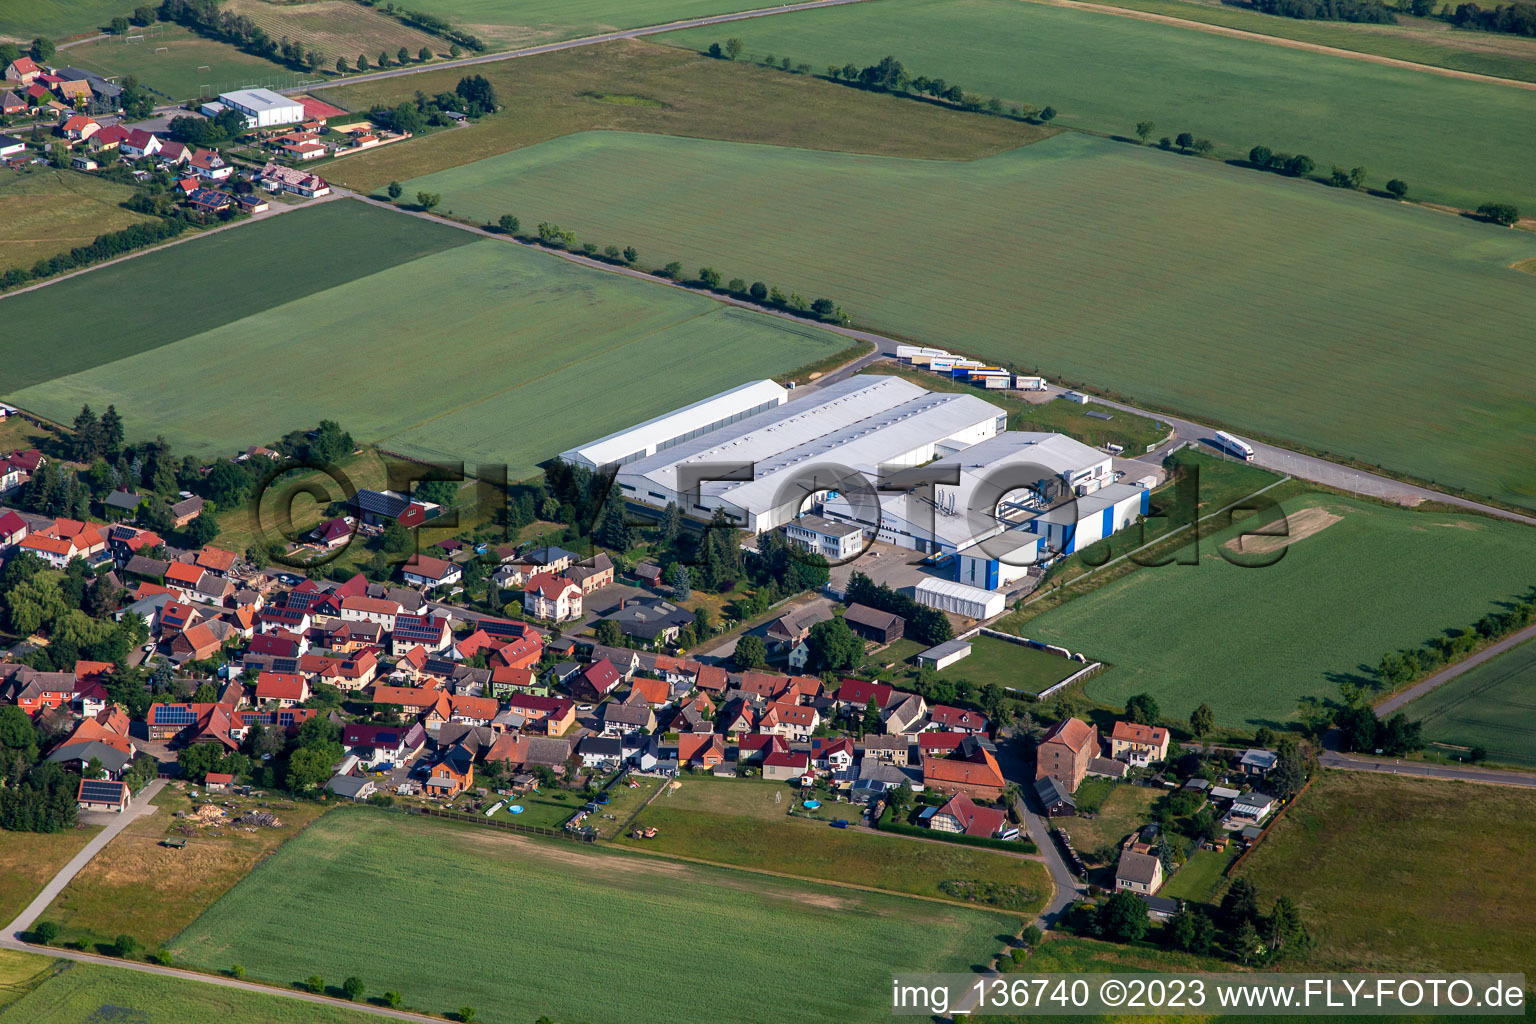 Swisspor Deutschland GmbH in the district Dankerode in Harzgerode in the state Saxony-Anhalt, Germany